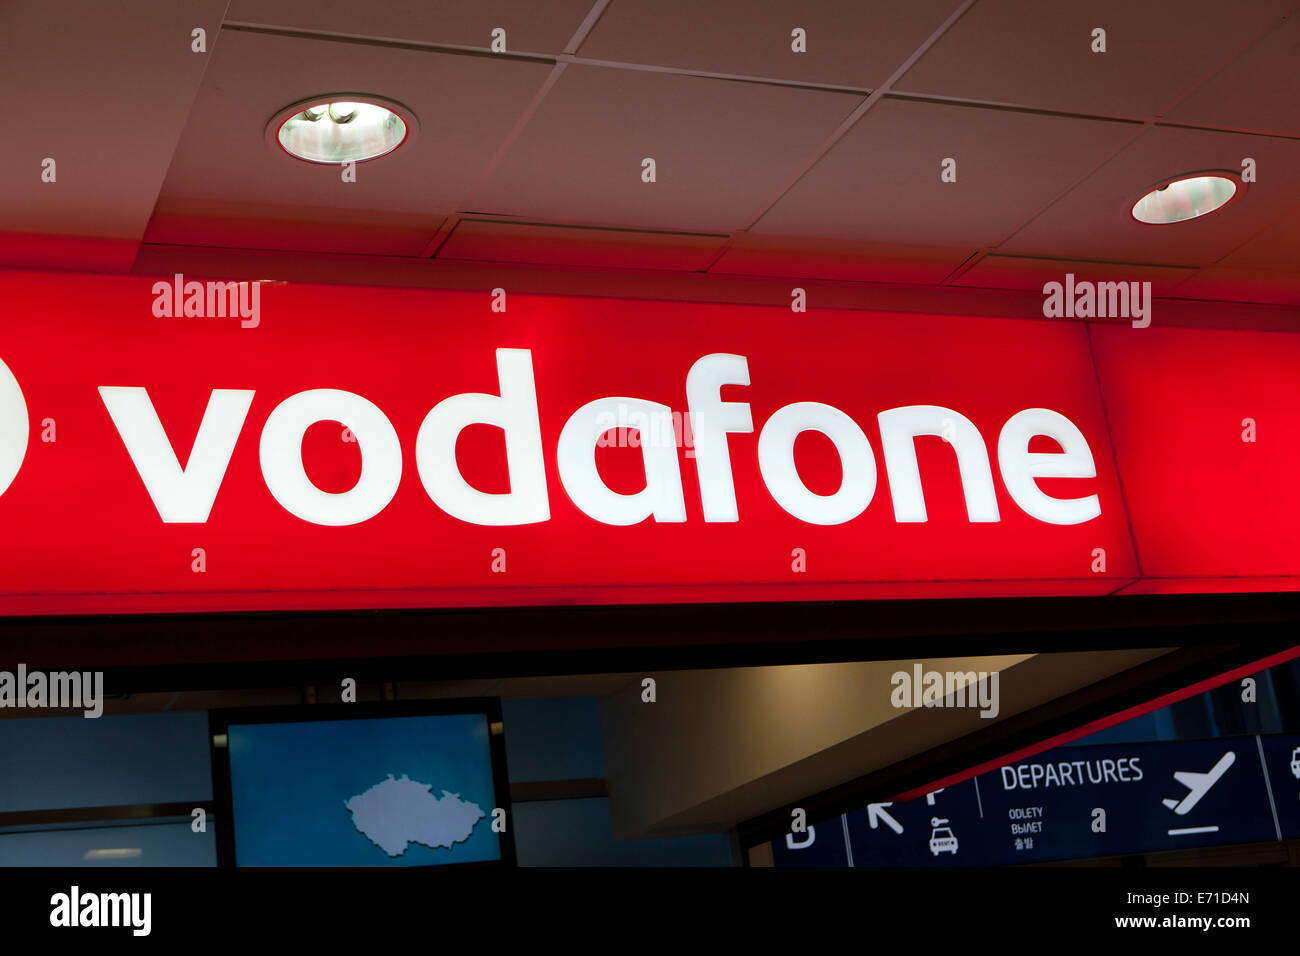 Vodafone logo ad Stock Photo